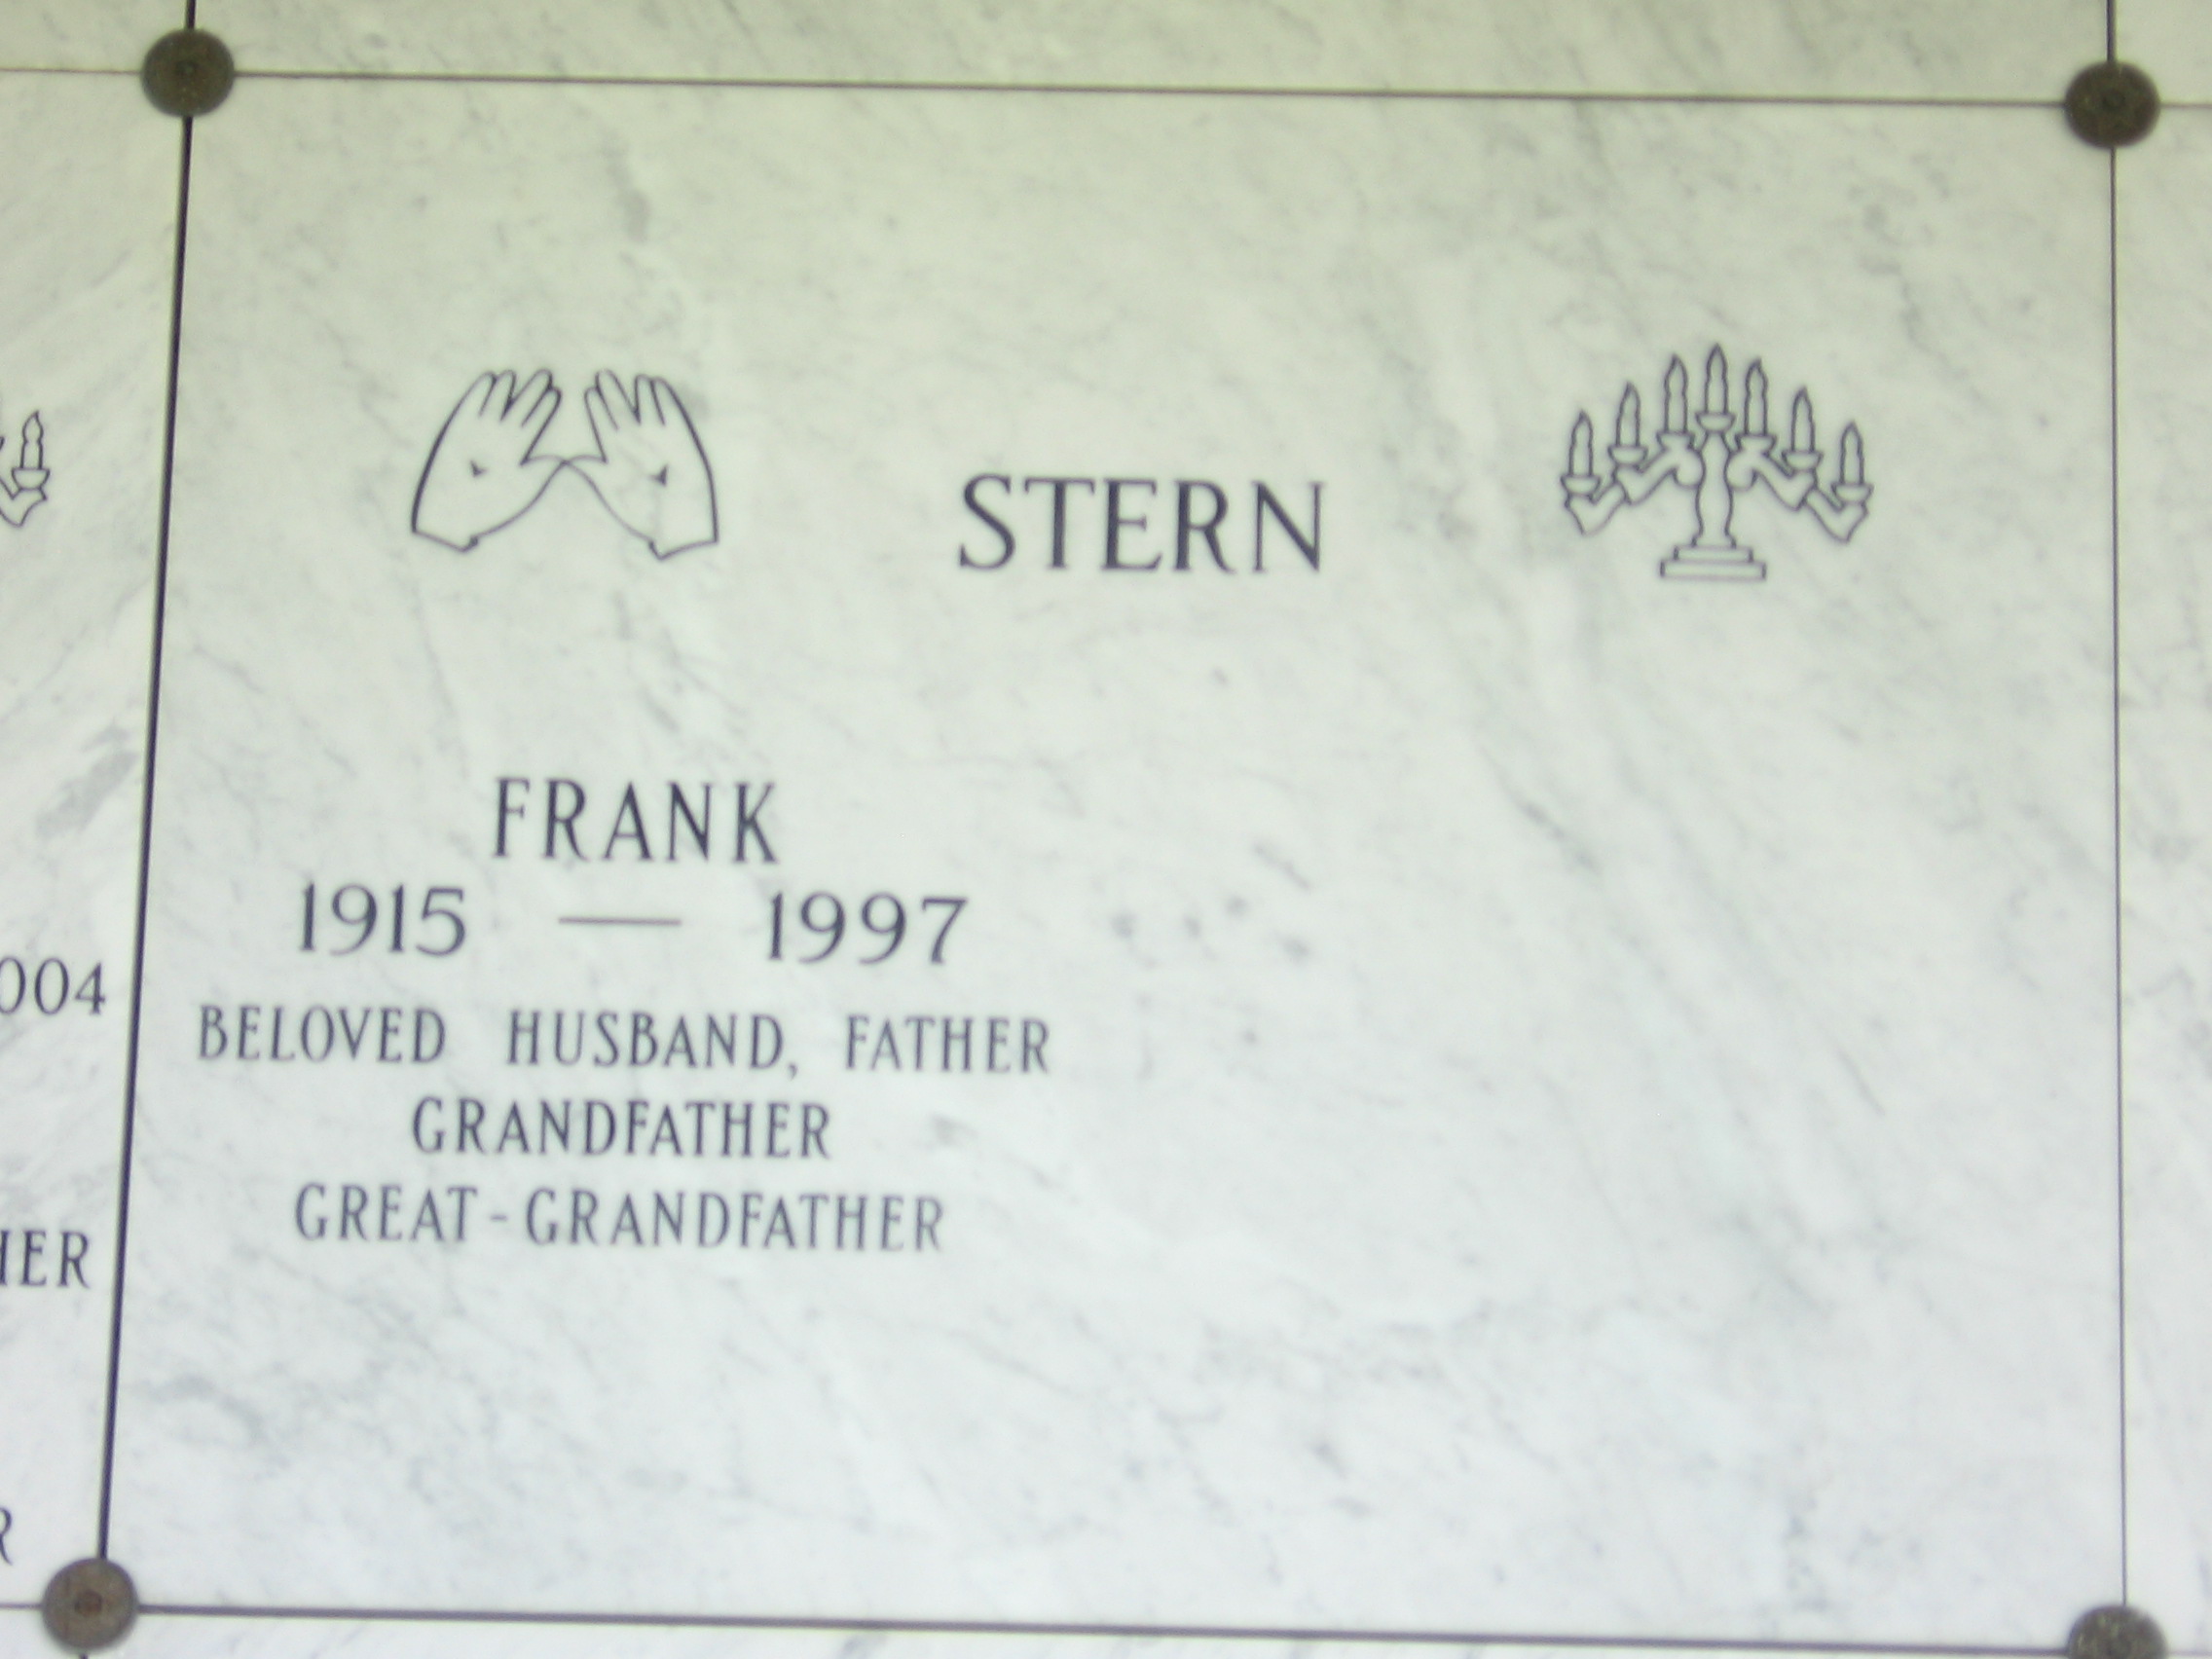 Frank Stern